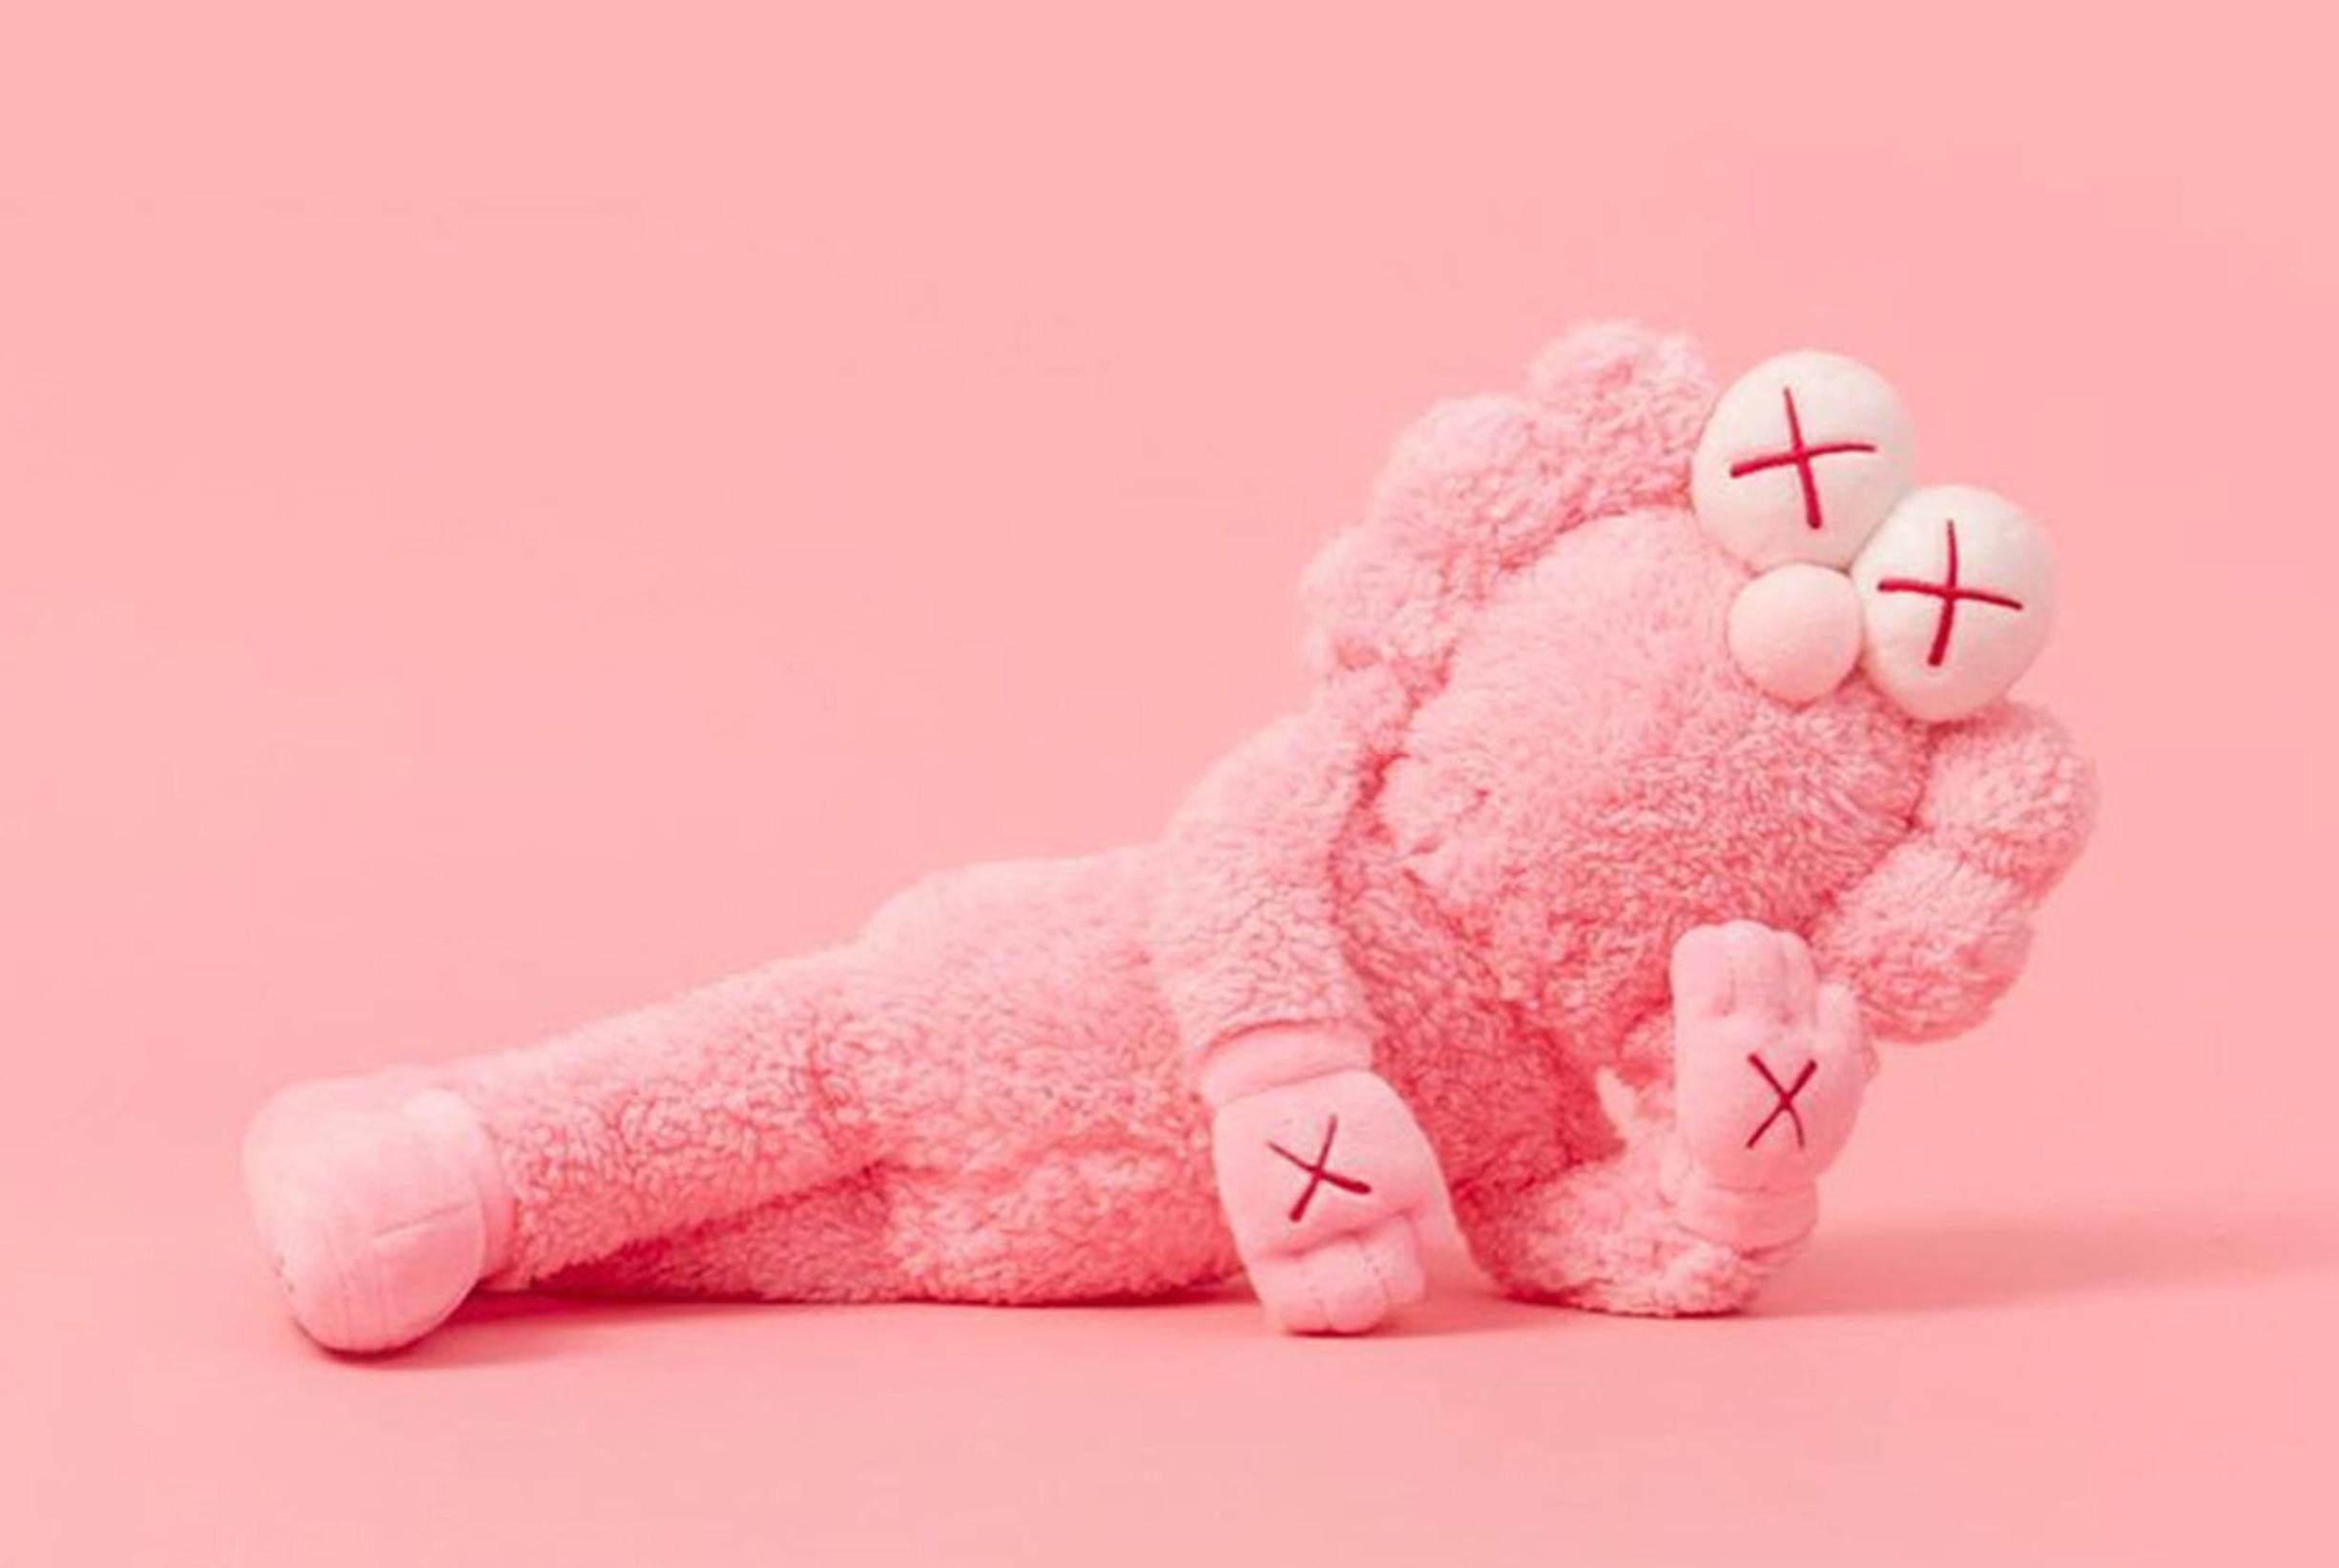 KAWS
Pink BFF Plush, 2019
Plush doll
20 × 4 × 3 in  50.8 × 10.2 × 7.6 cm
Edition of 3000